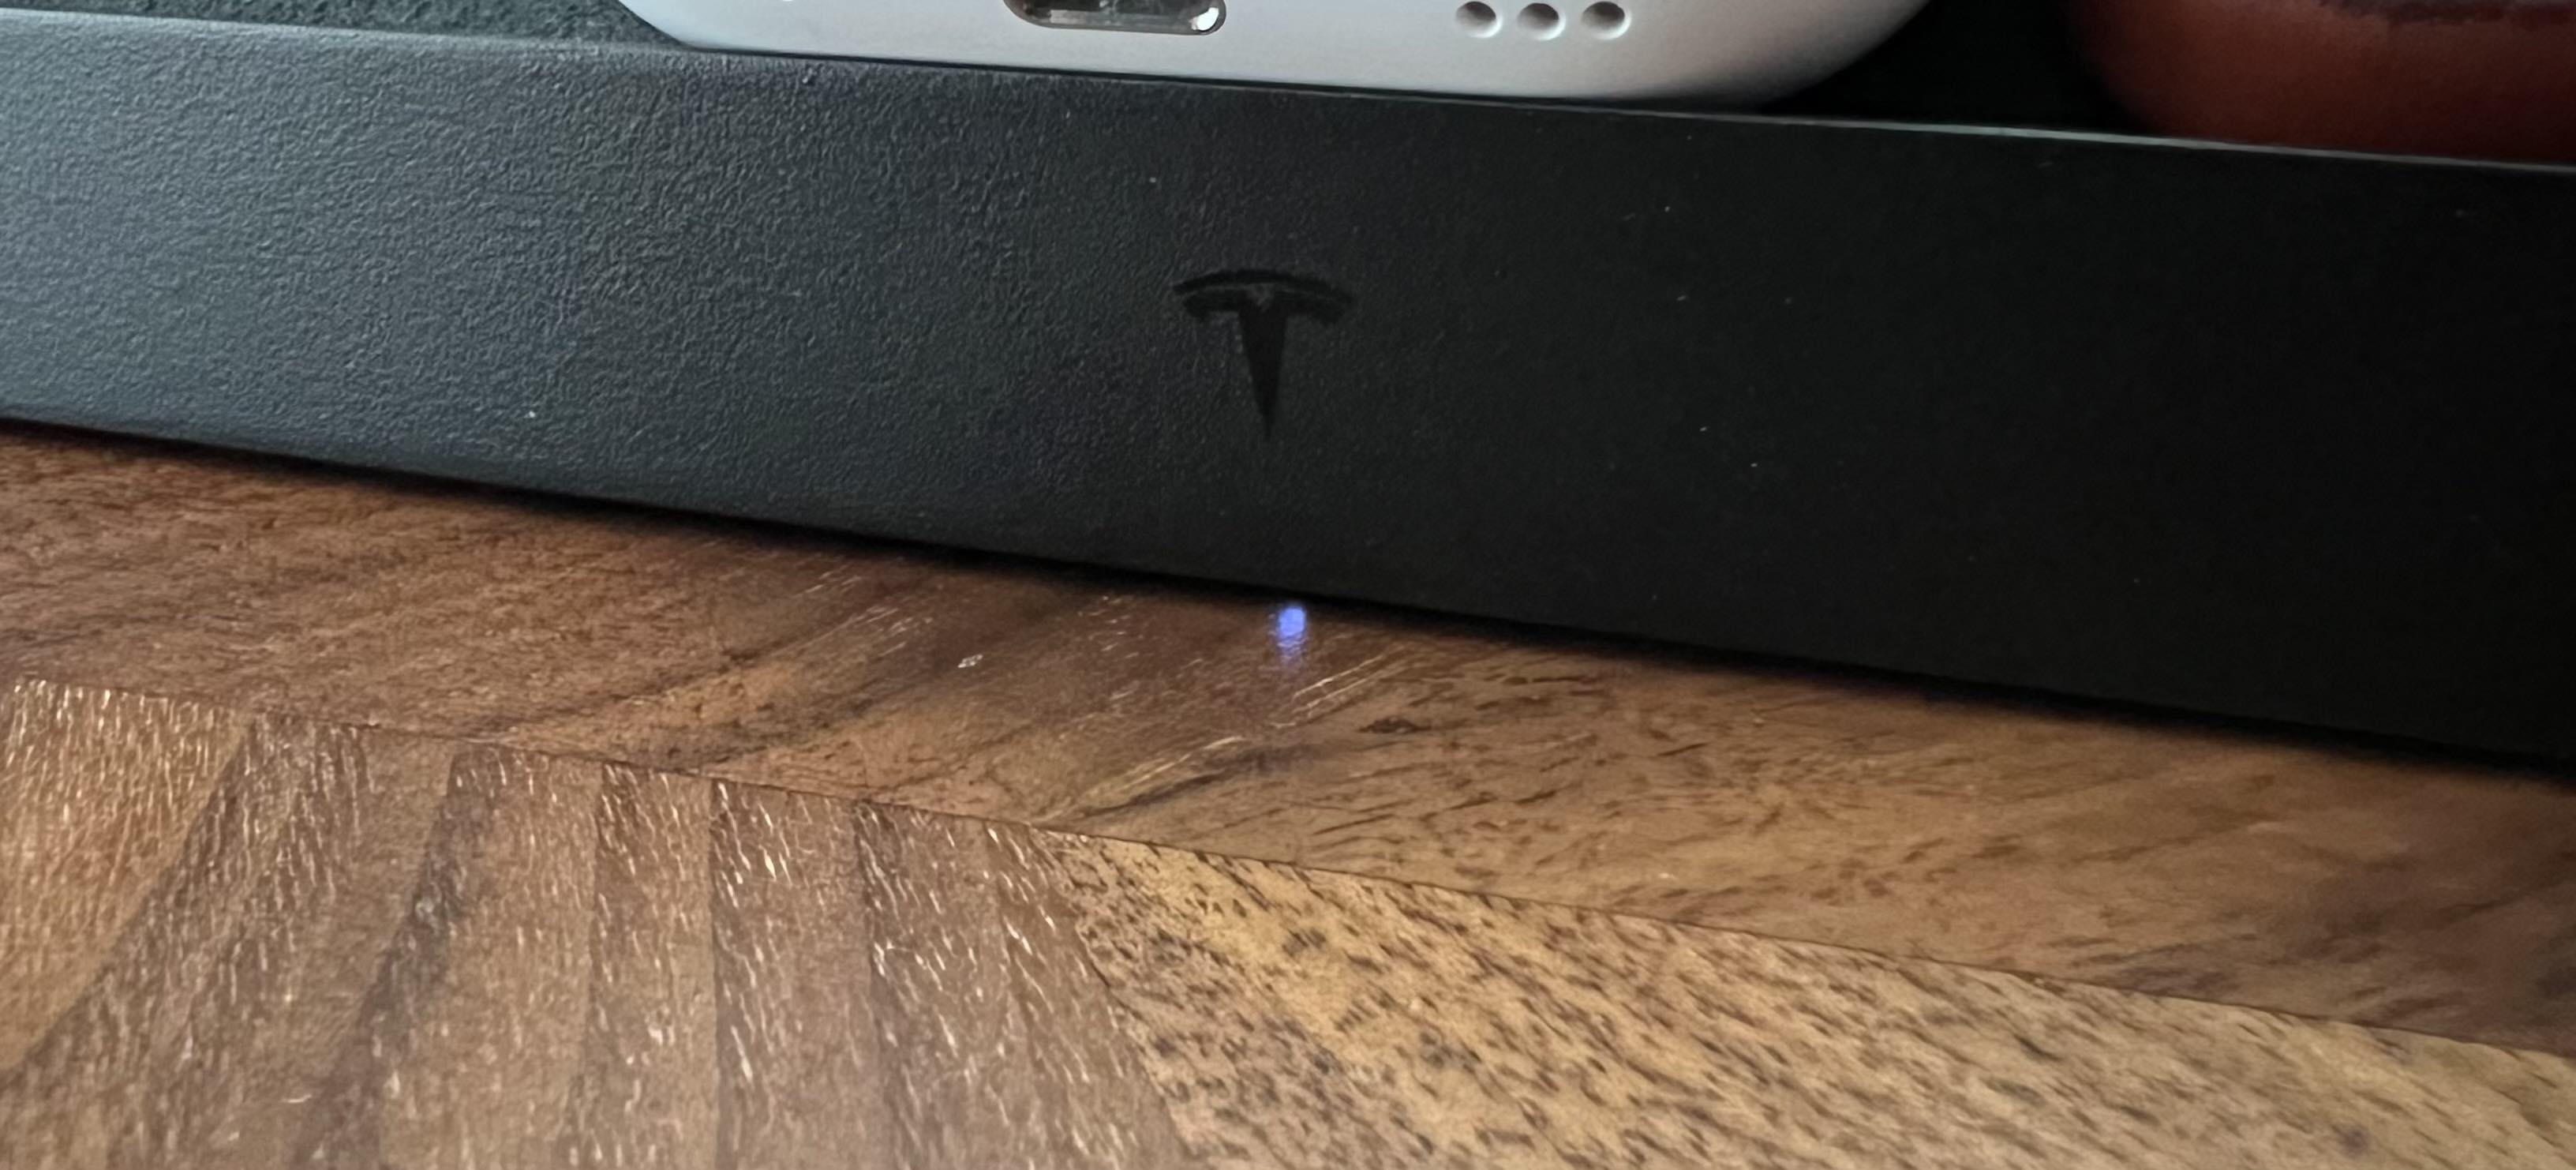 LED indicator for Tesla wireless charging pad